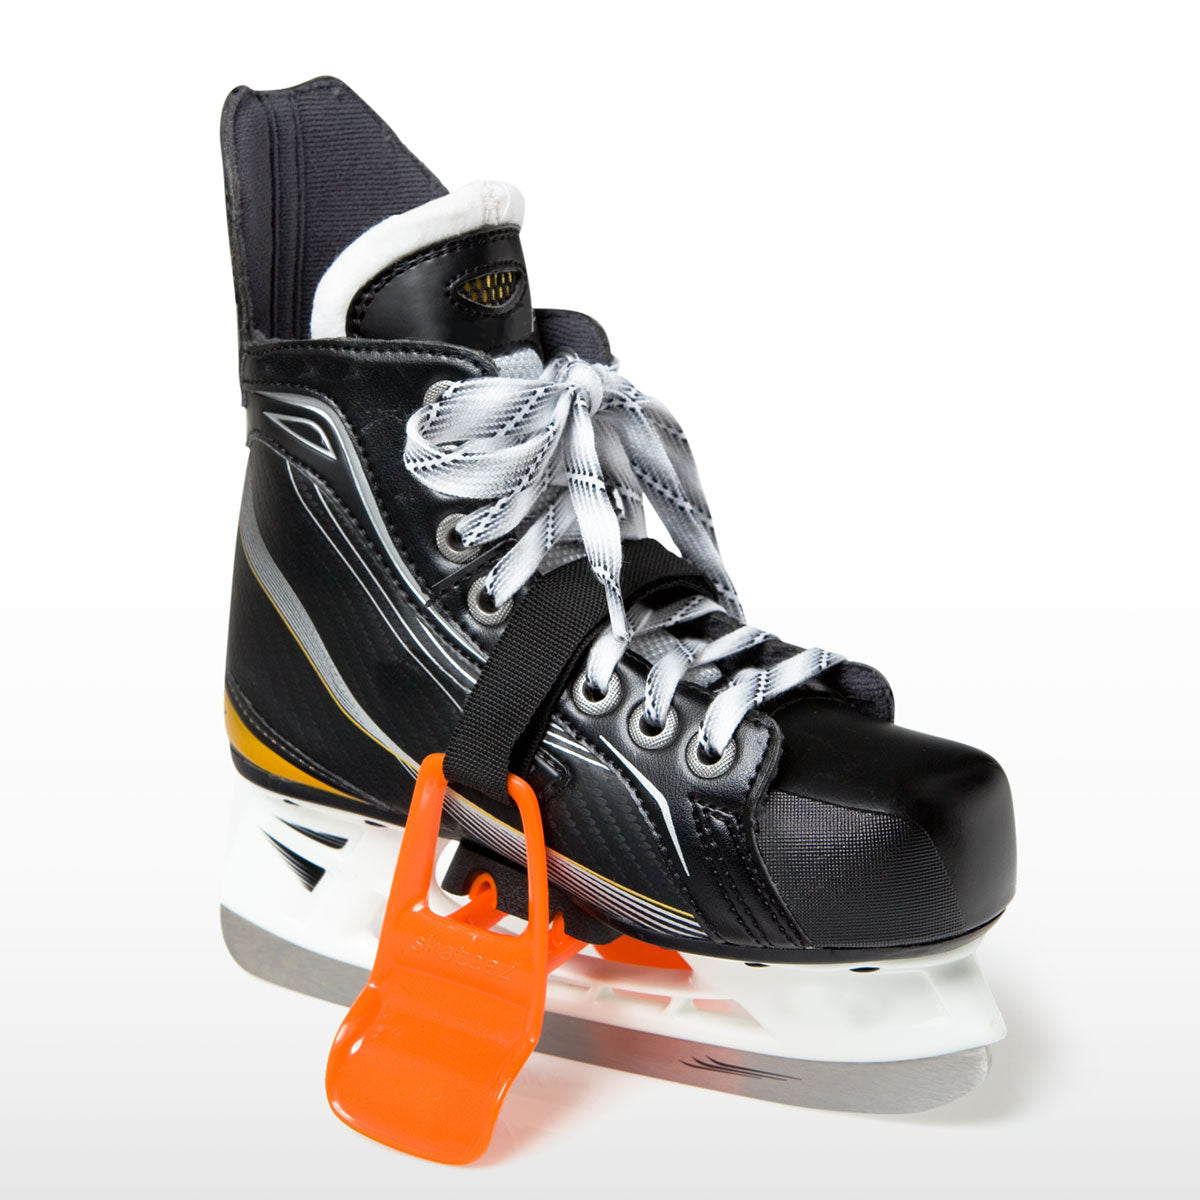 Skateez Youth Training Device for Ice Skating